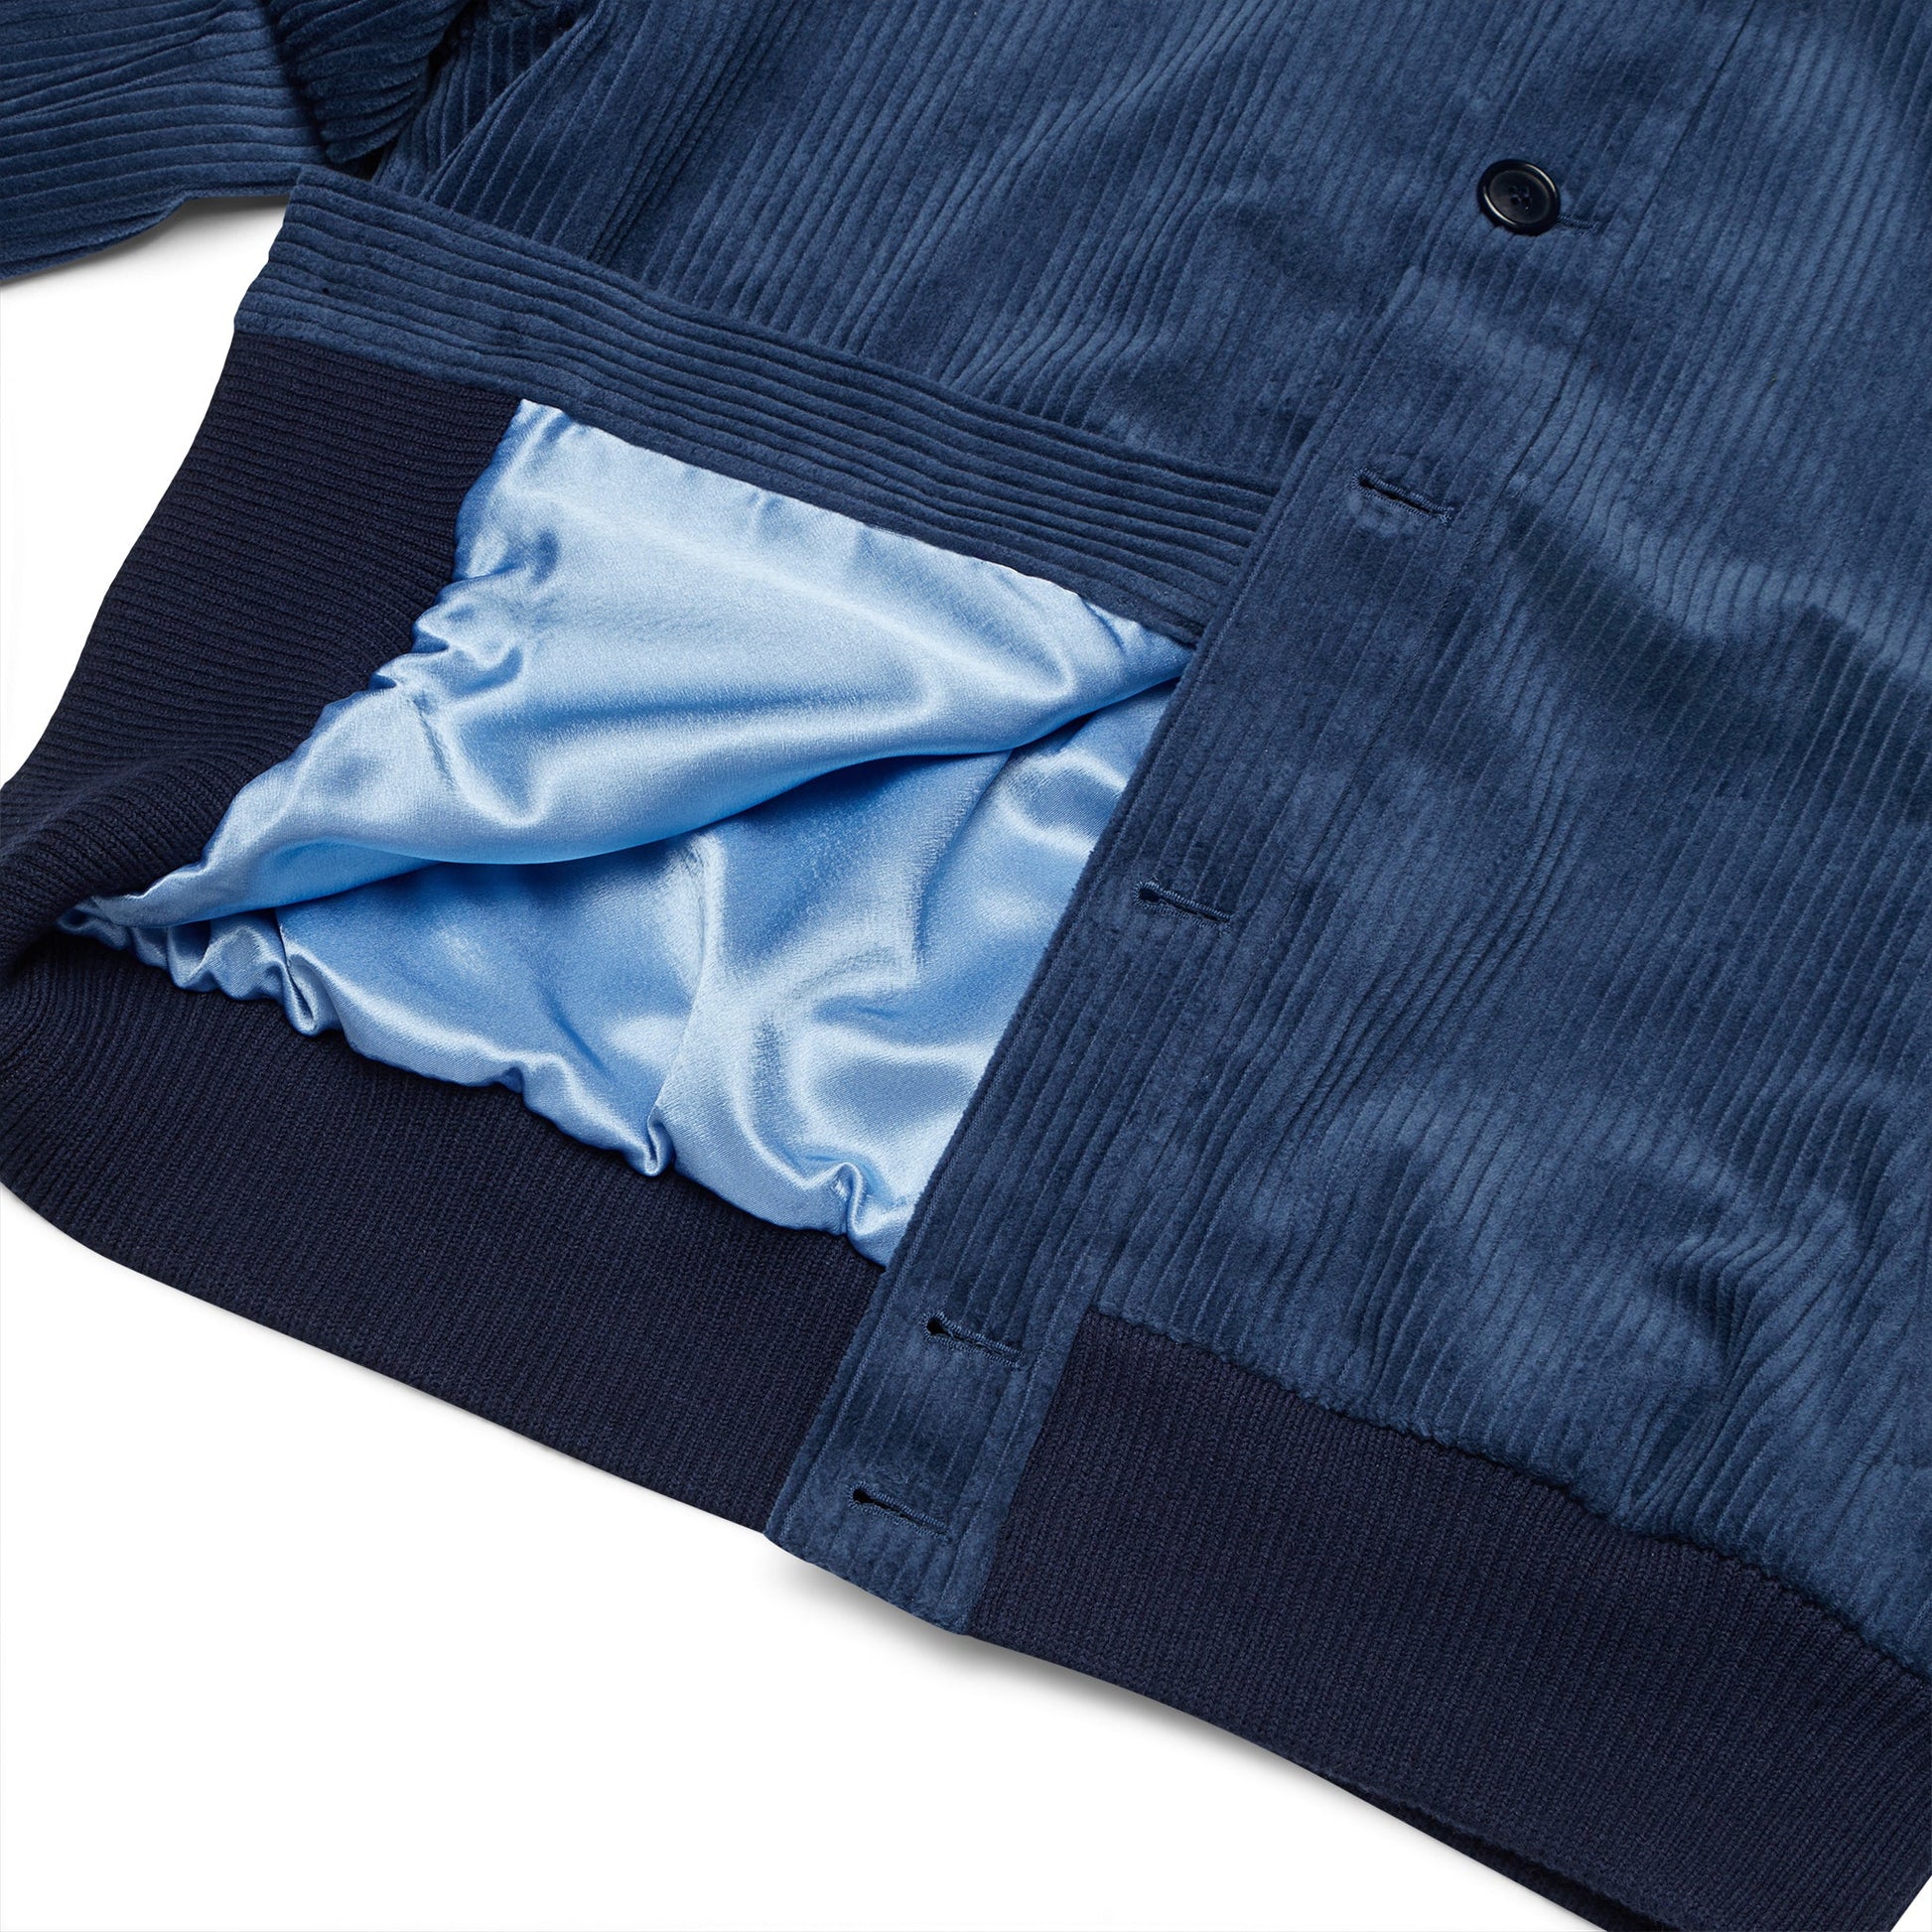 Blue Corduroy Jacket - Minted New York